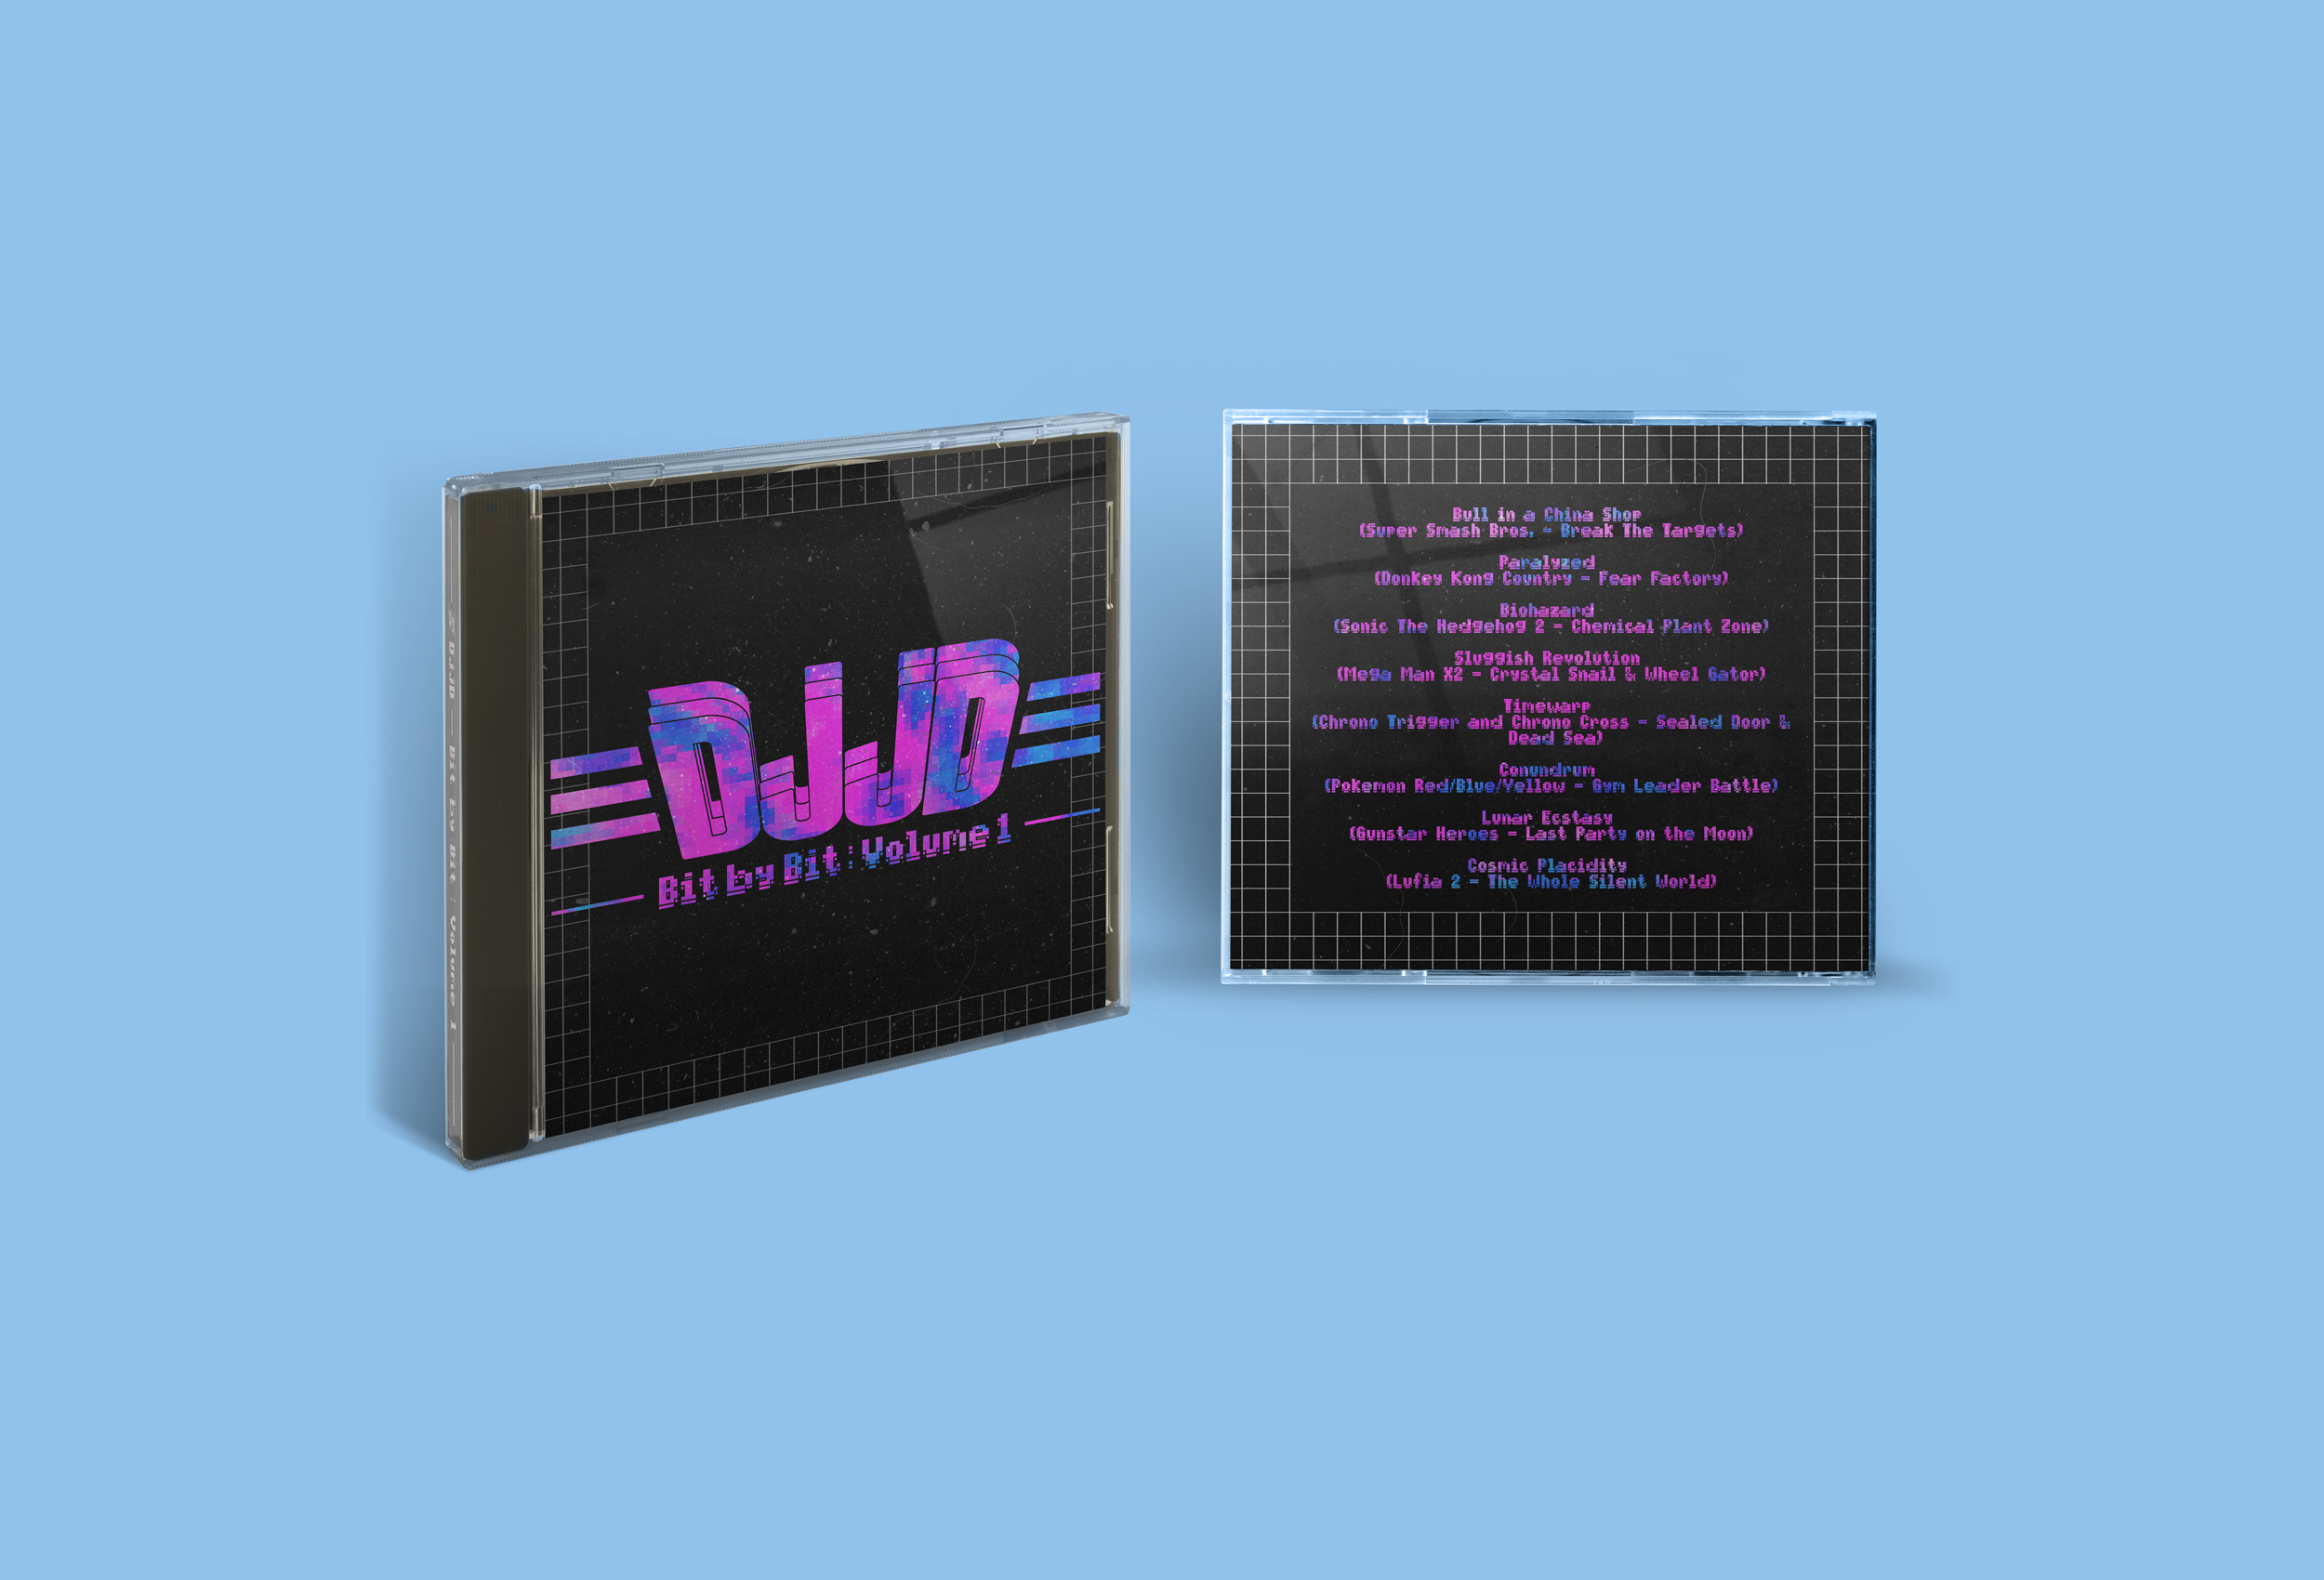 DjjD - Bit By Bit album artwork and CD packaging design.